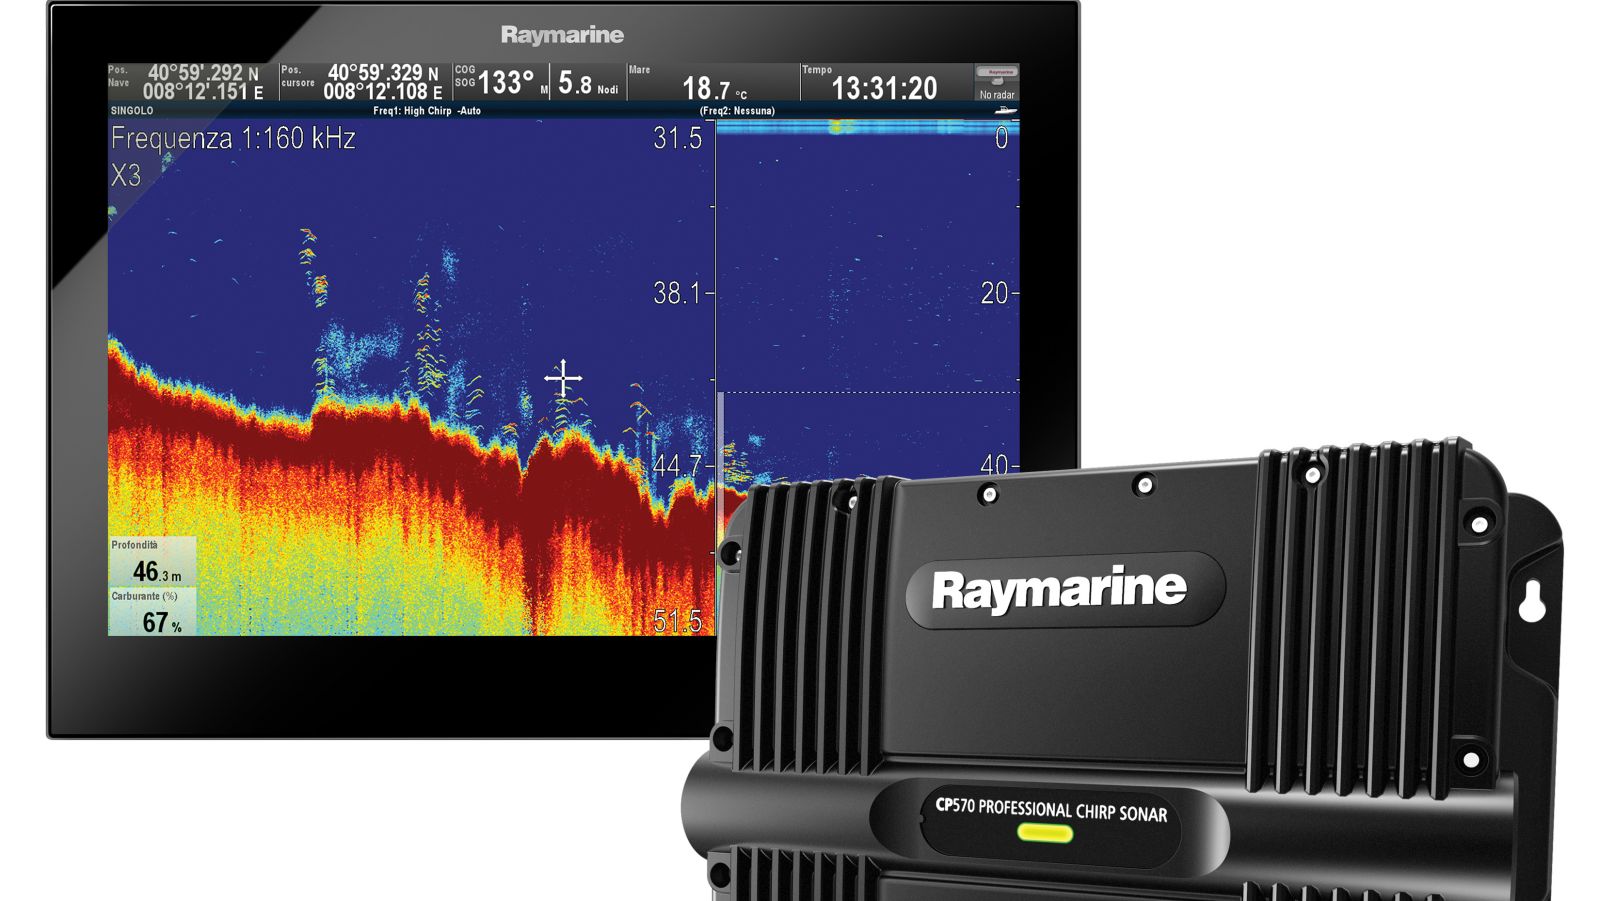 Raymarine's new CP570 Professional CHIRP sonar